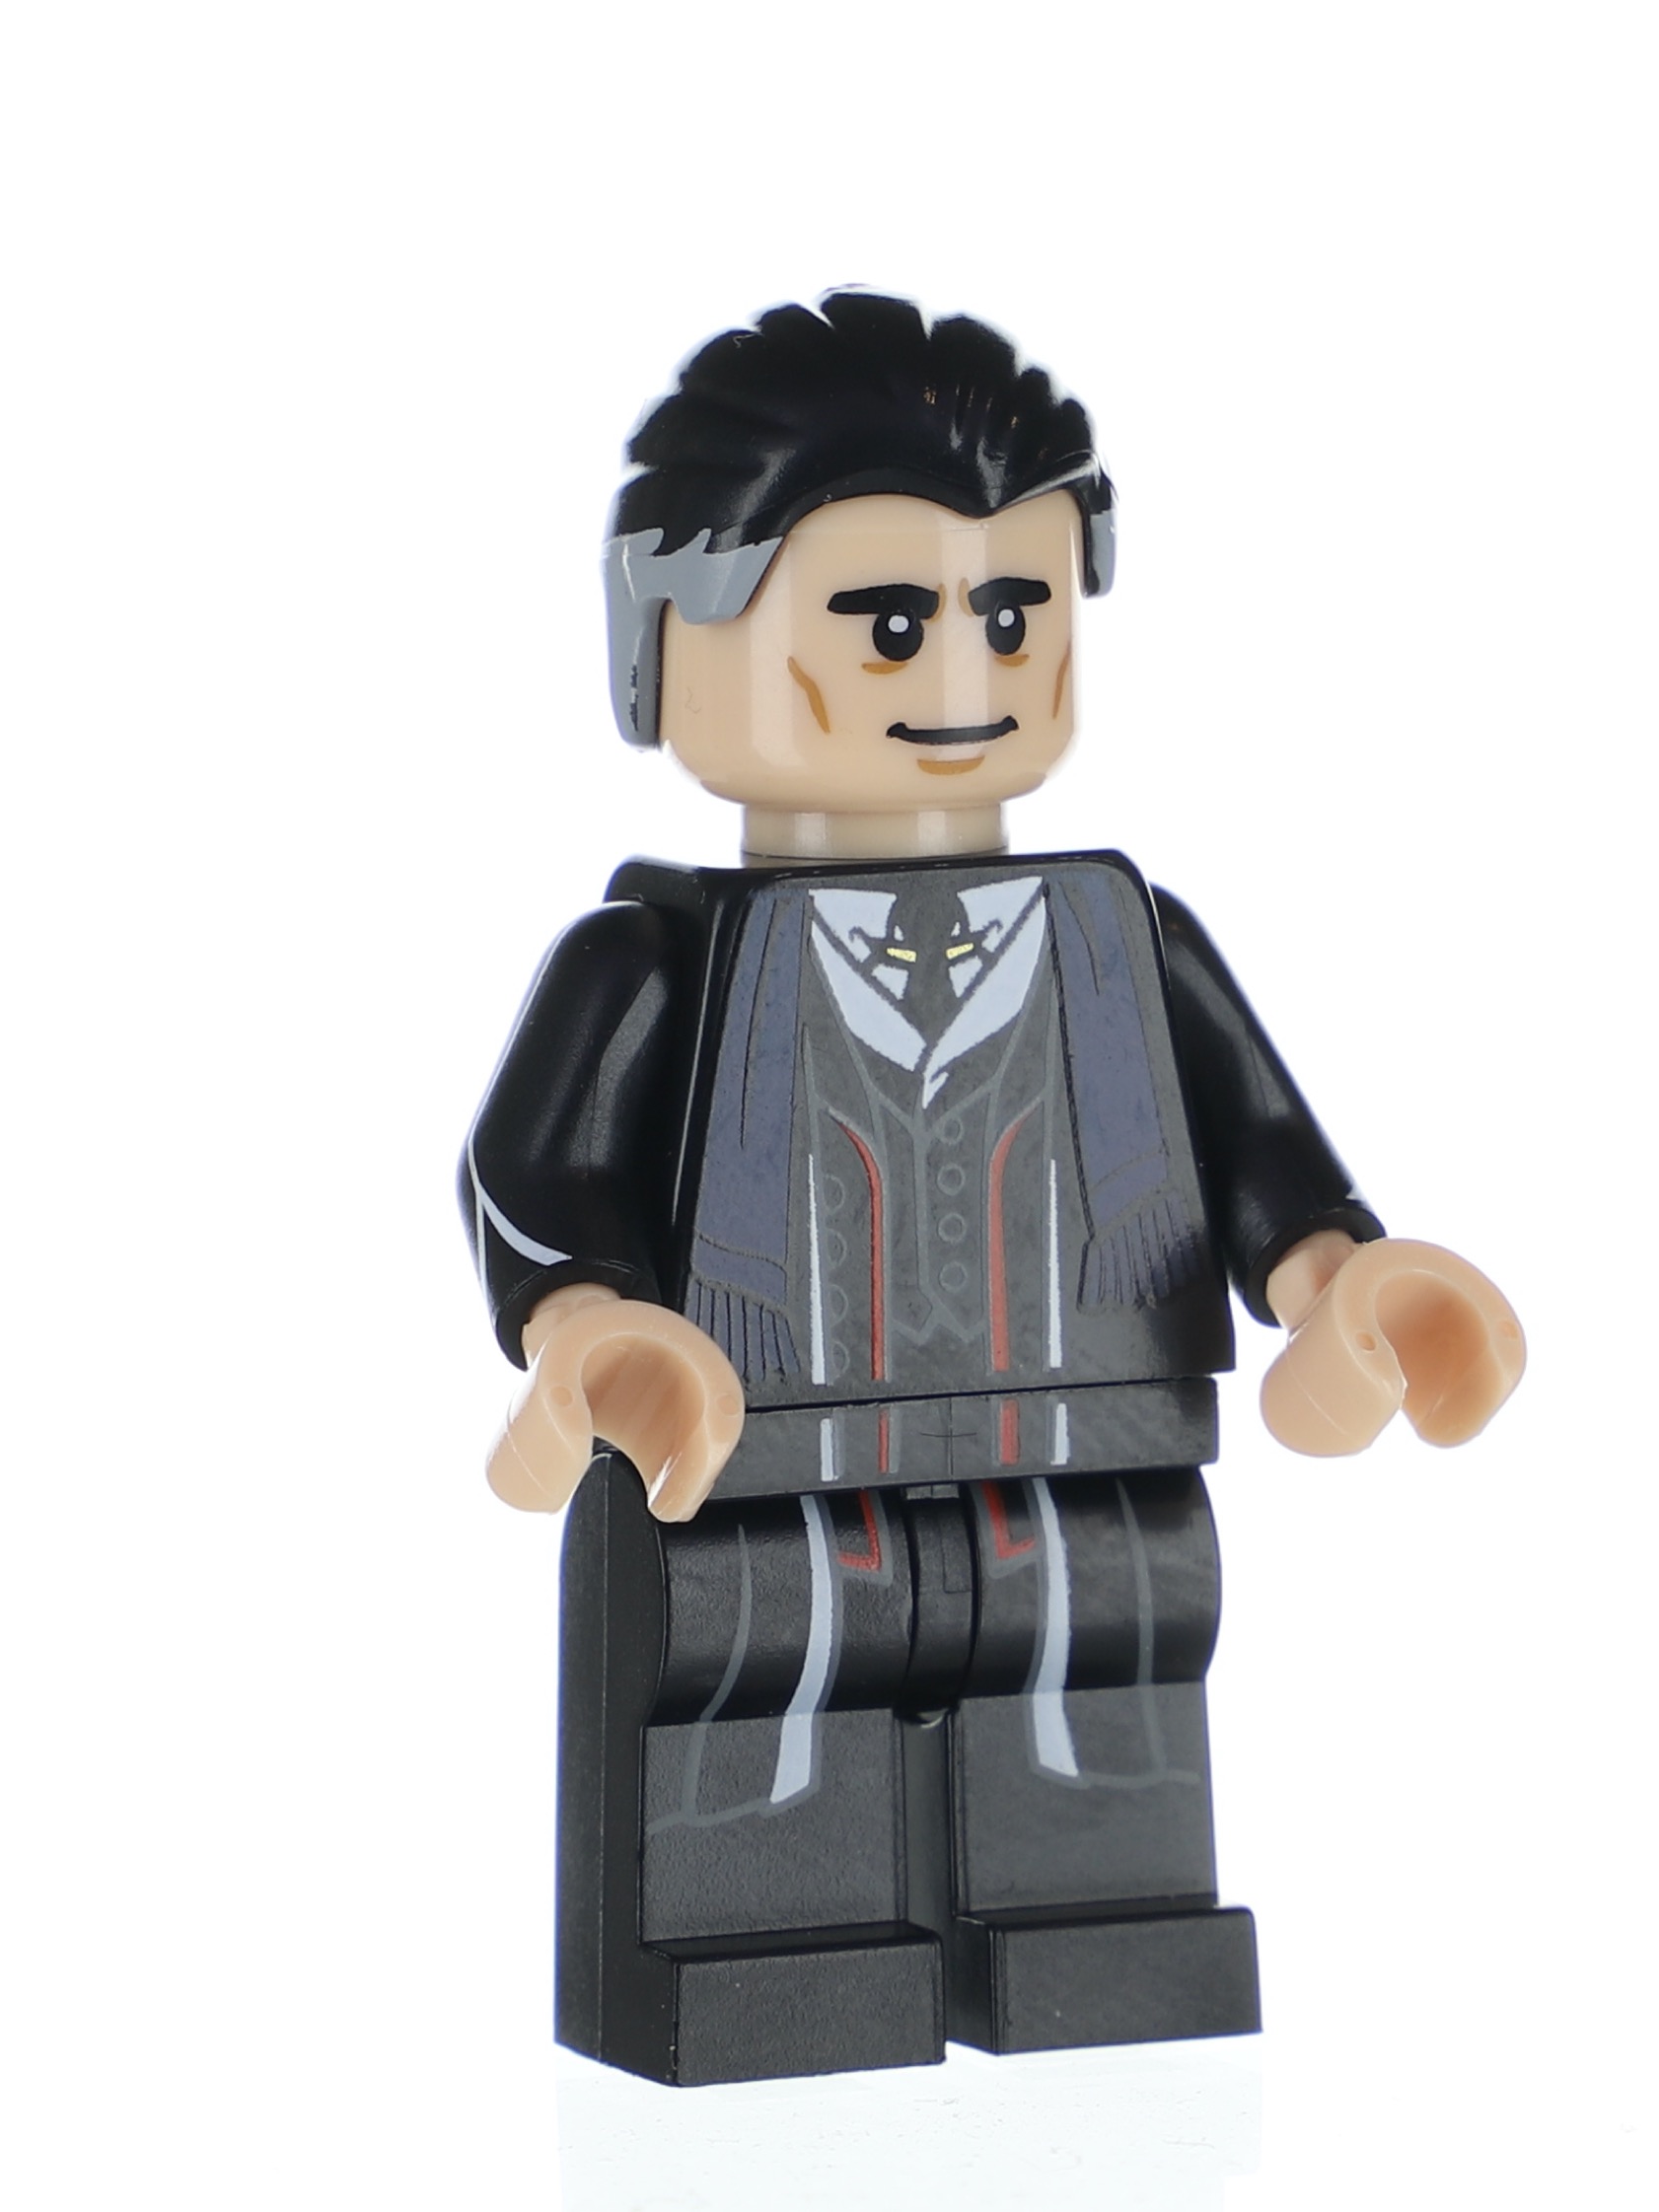 New Lego Harry Potter/Fantastic Beasts Minifigure 71022 Rare Percival Graves 